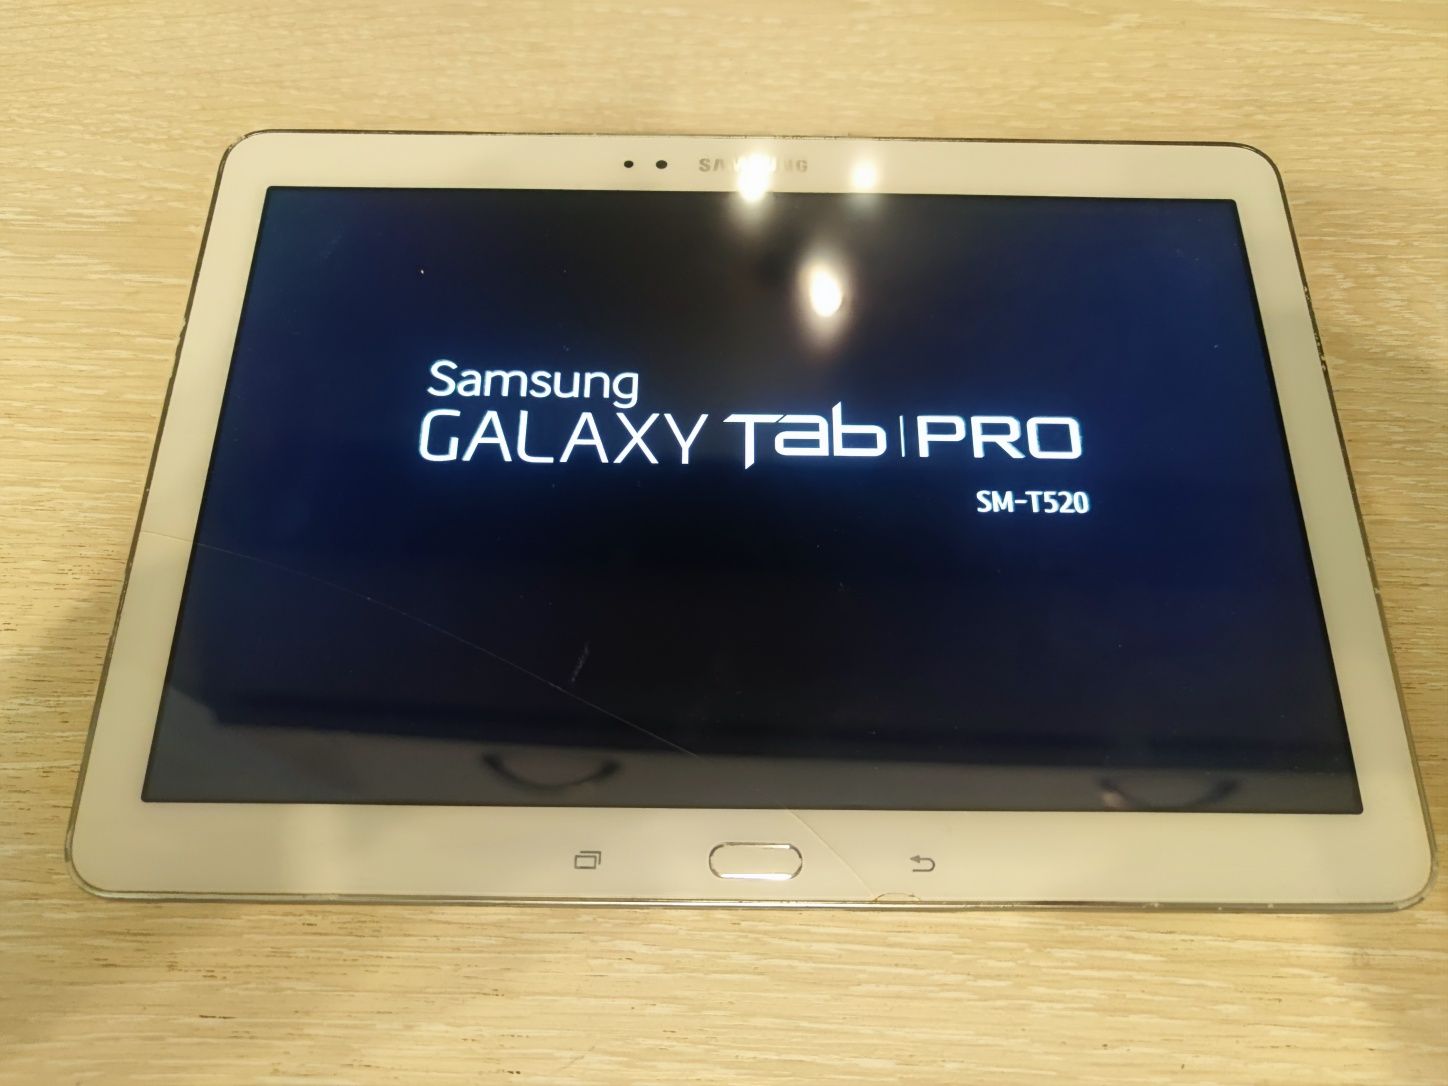 Samsung galaxy tab pro sm-t520